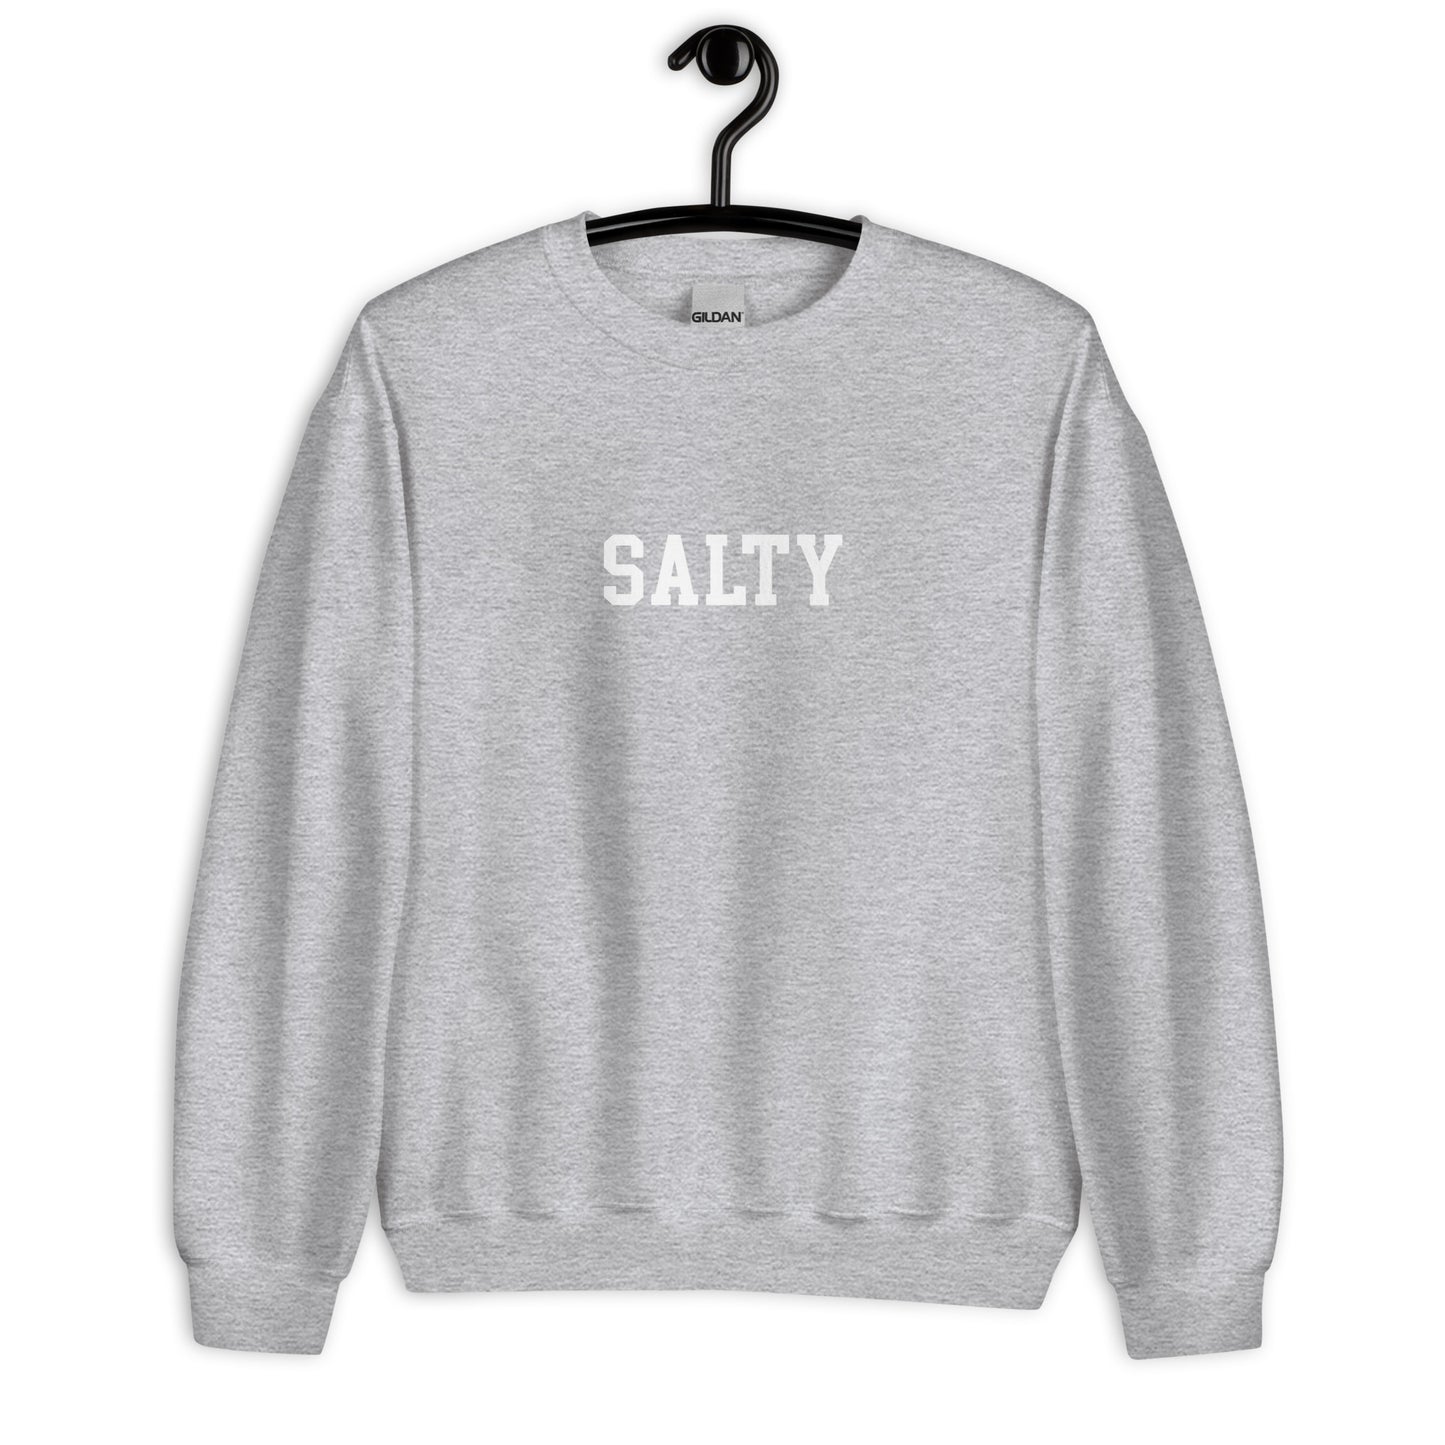 Salty Sweatshirt - Straight Font